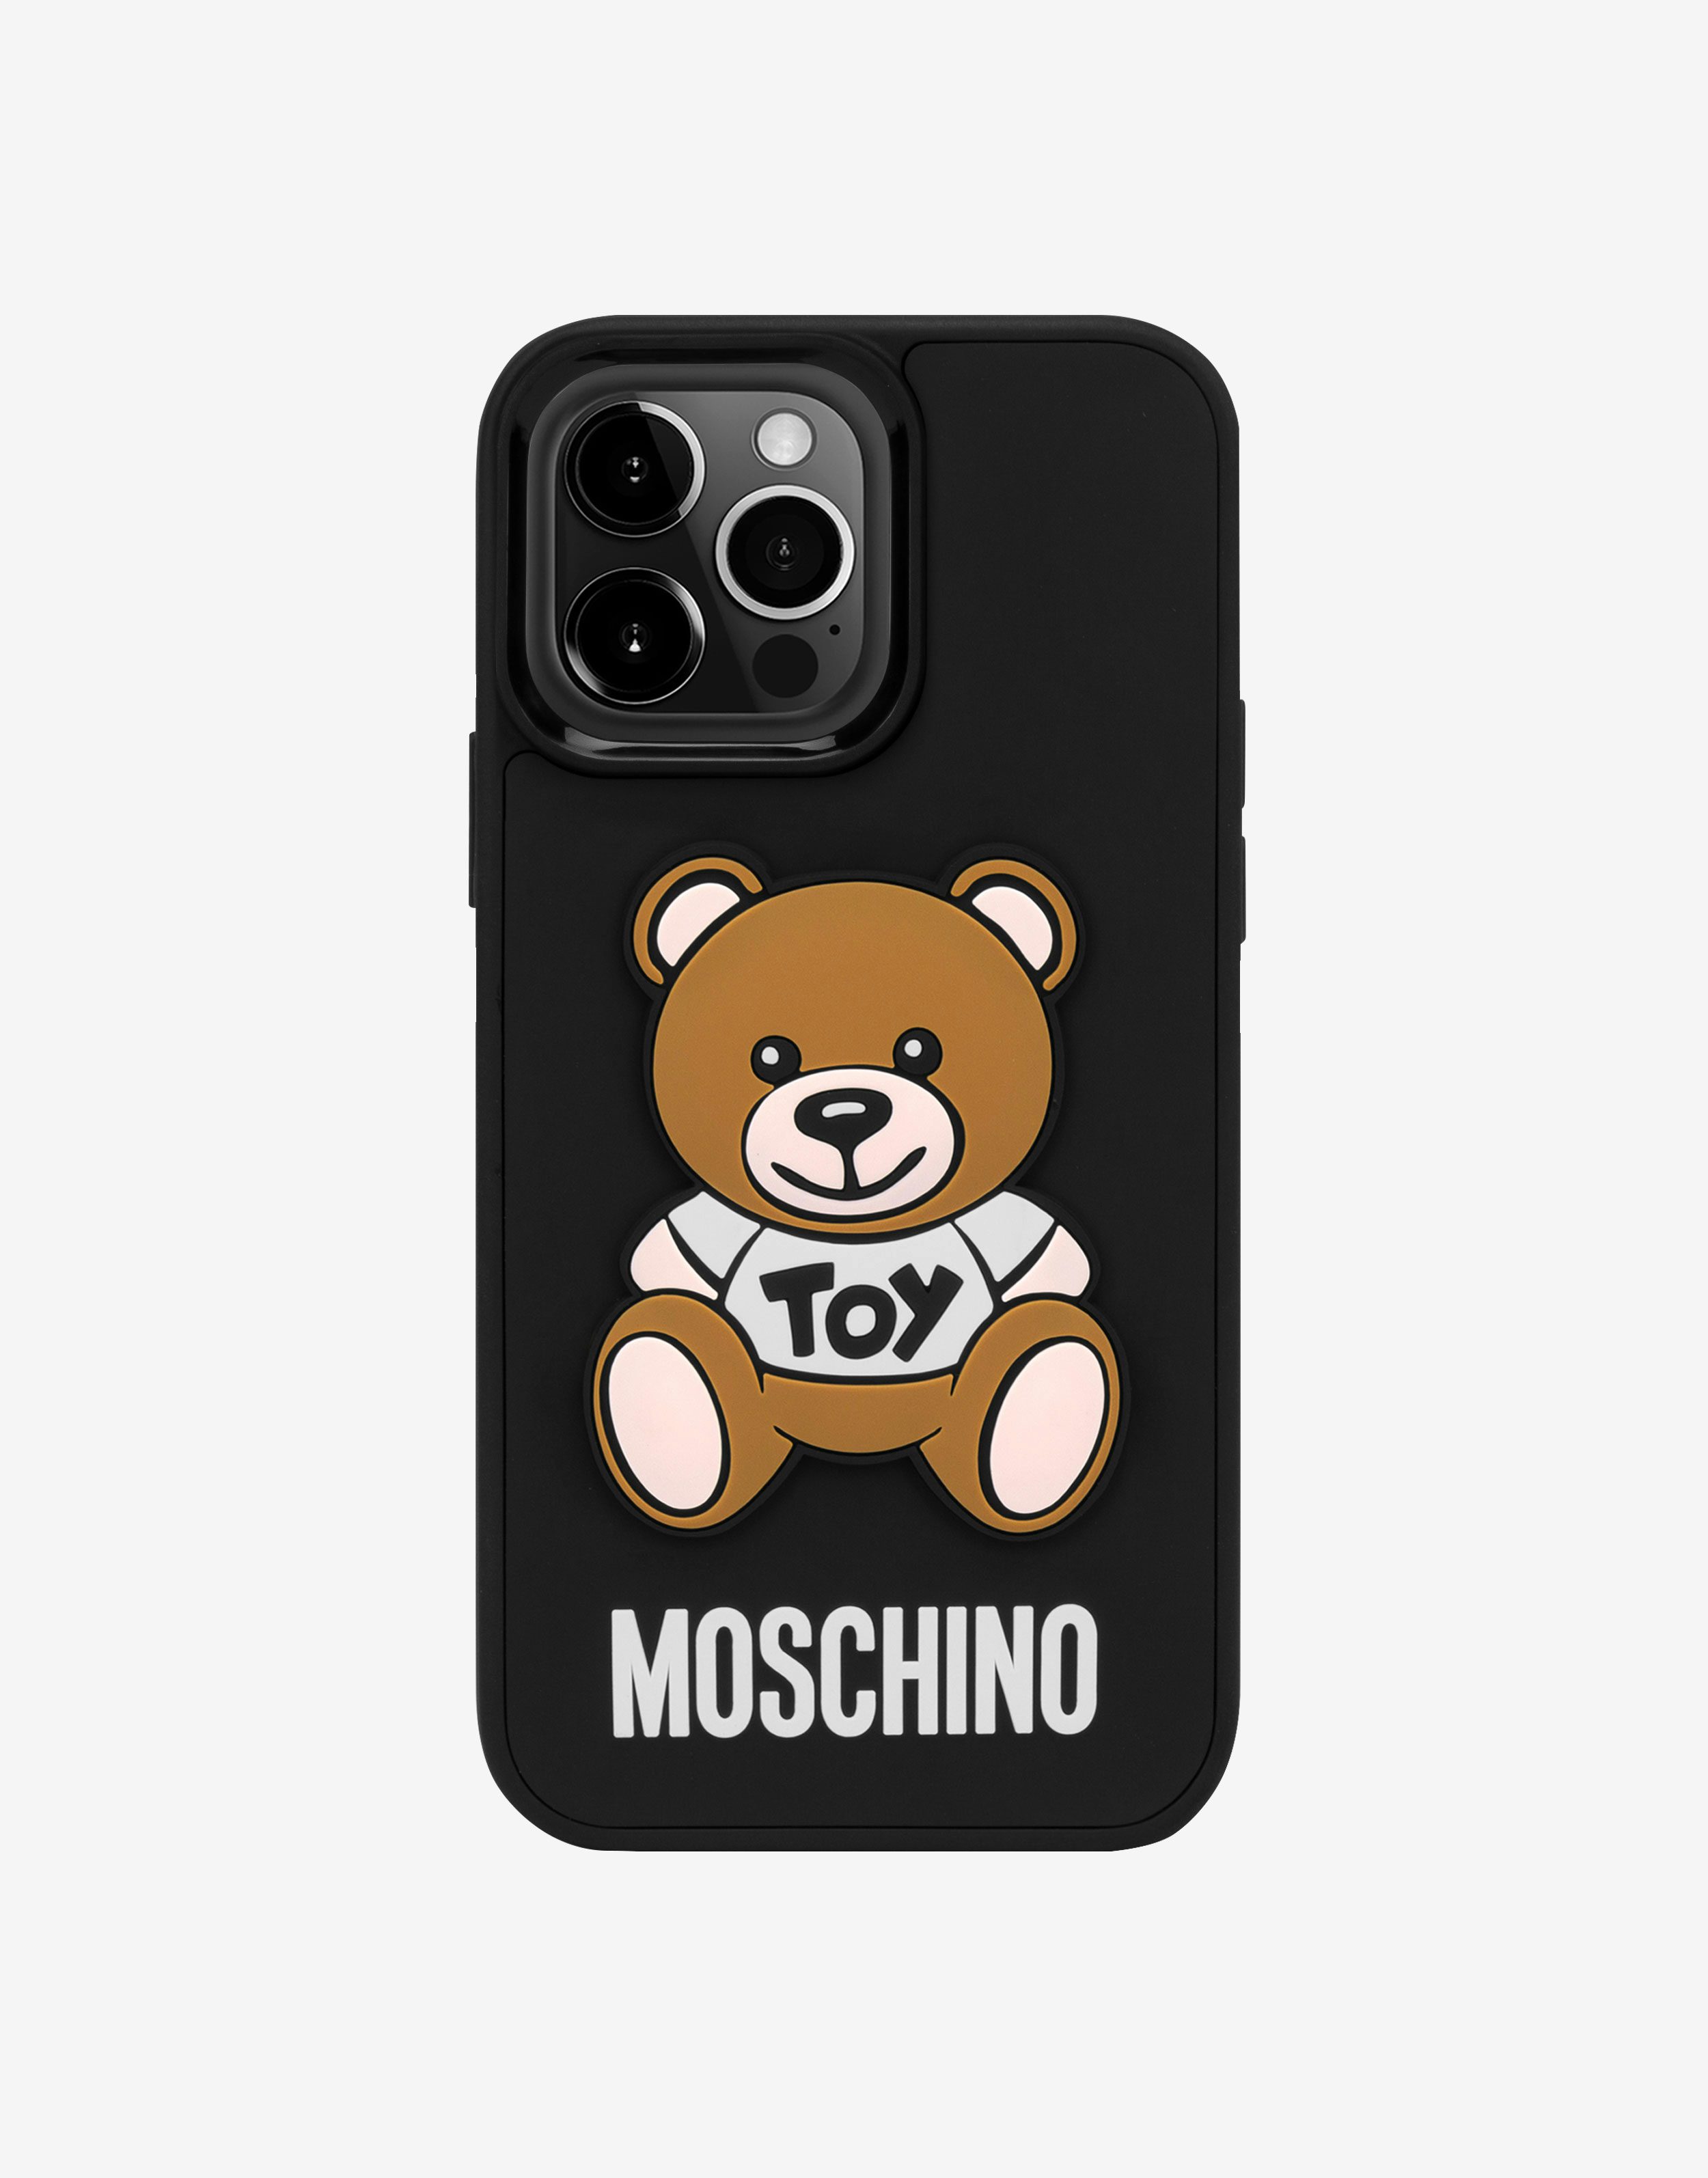 Moschino テディベア iPhone  Pro Max用カバー   Moschino Official